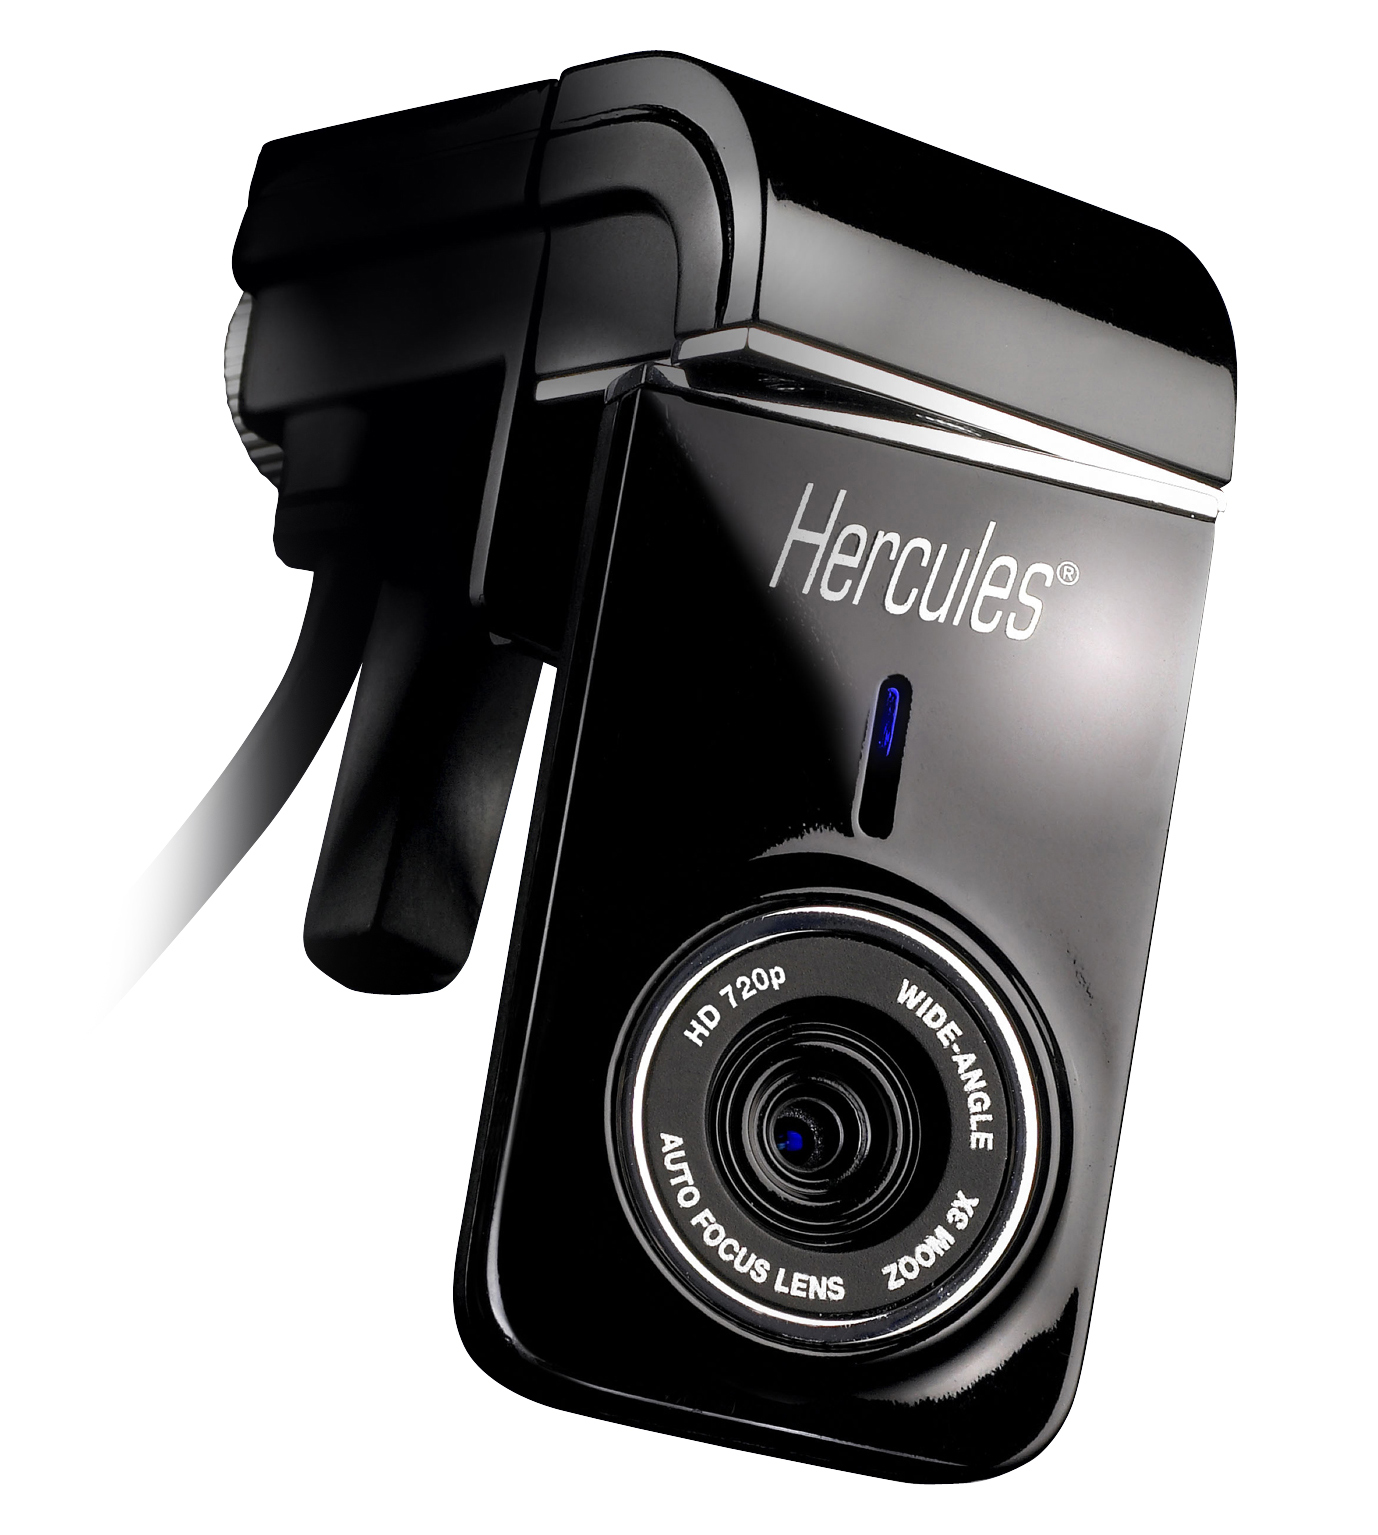 Hercules Dualpix USB 2.0 HD720p WebCam for Notebooks